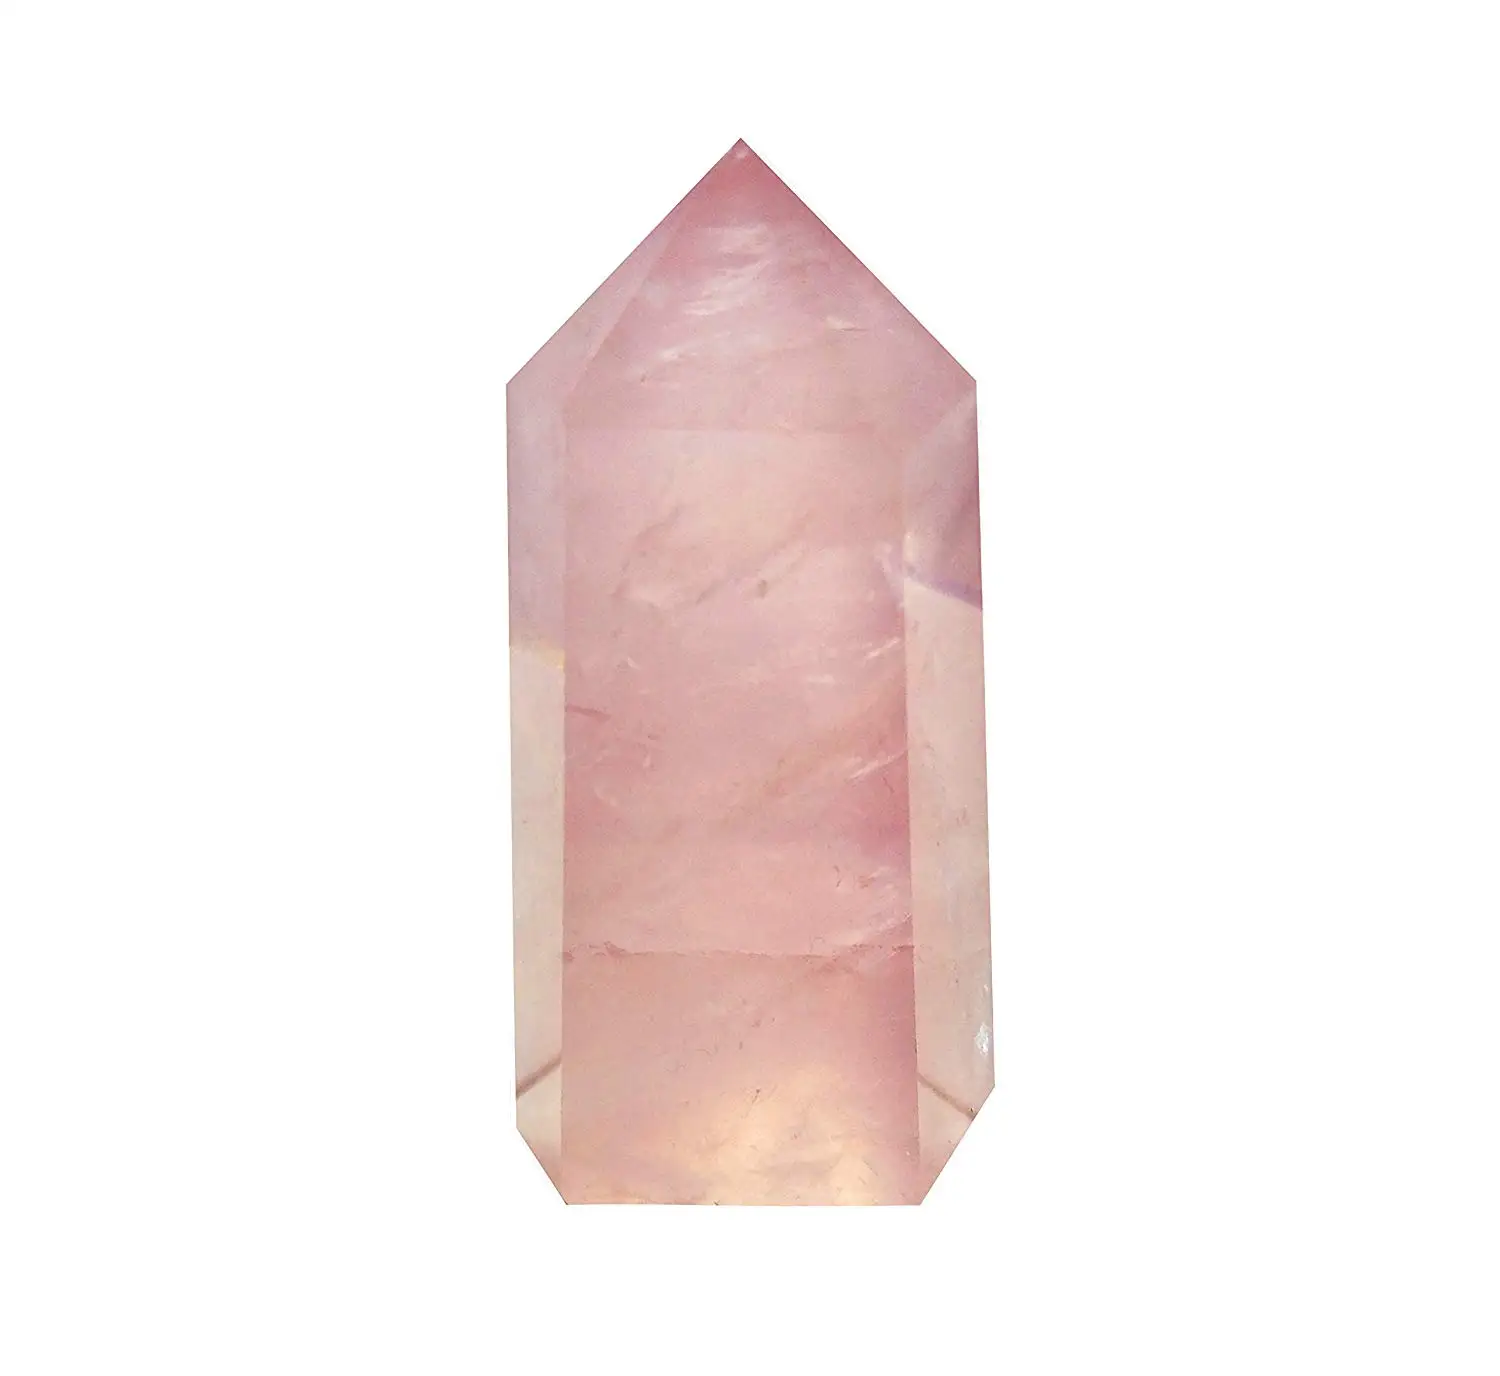 where can i buy rose quartz crystals